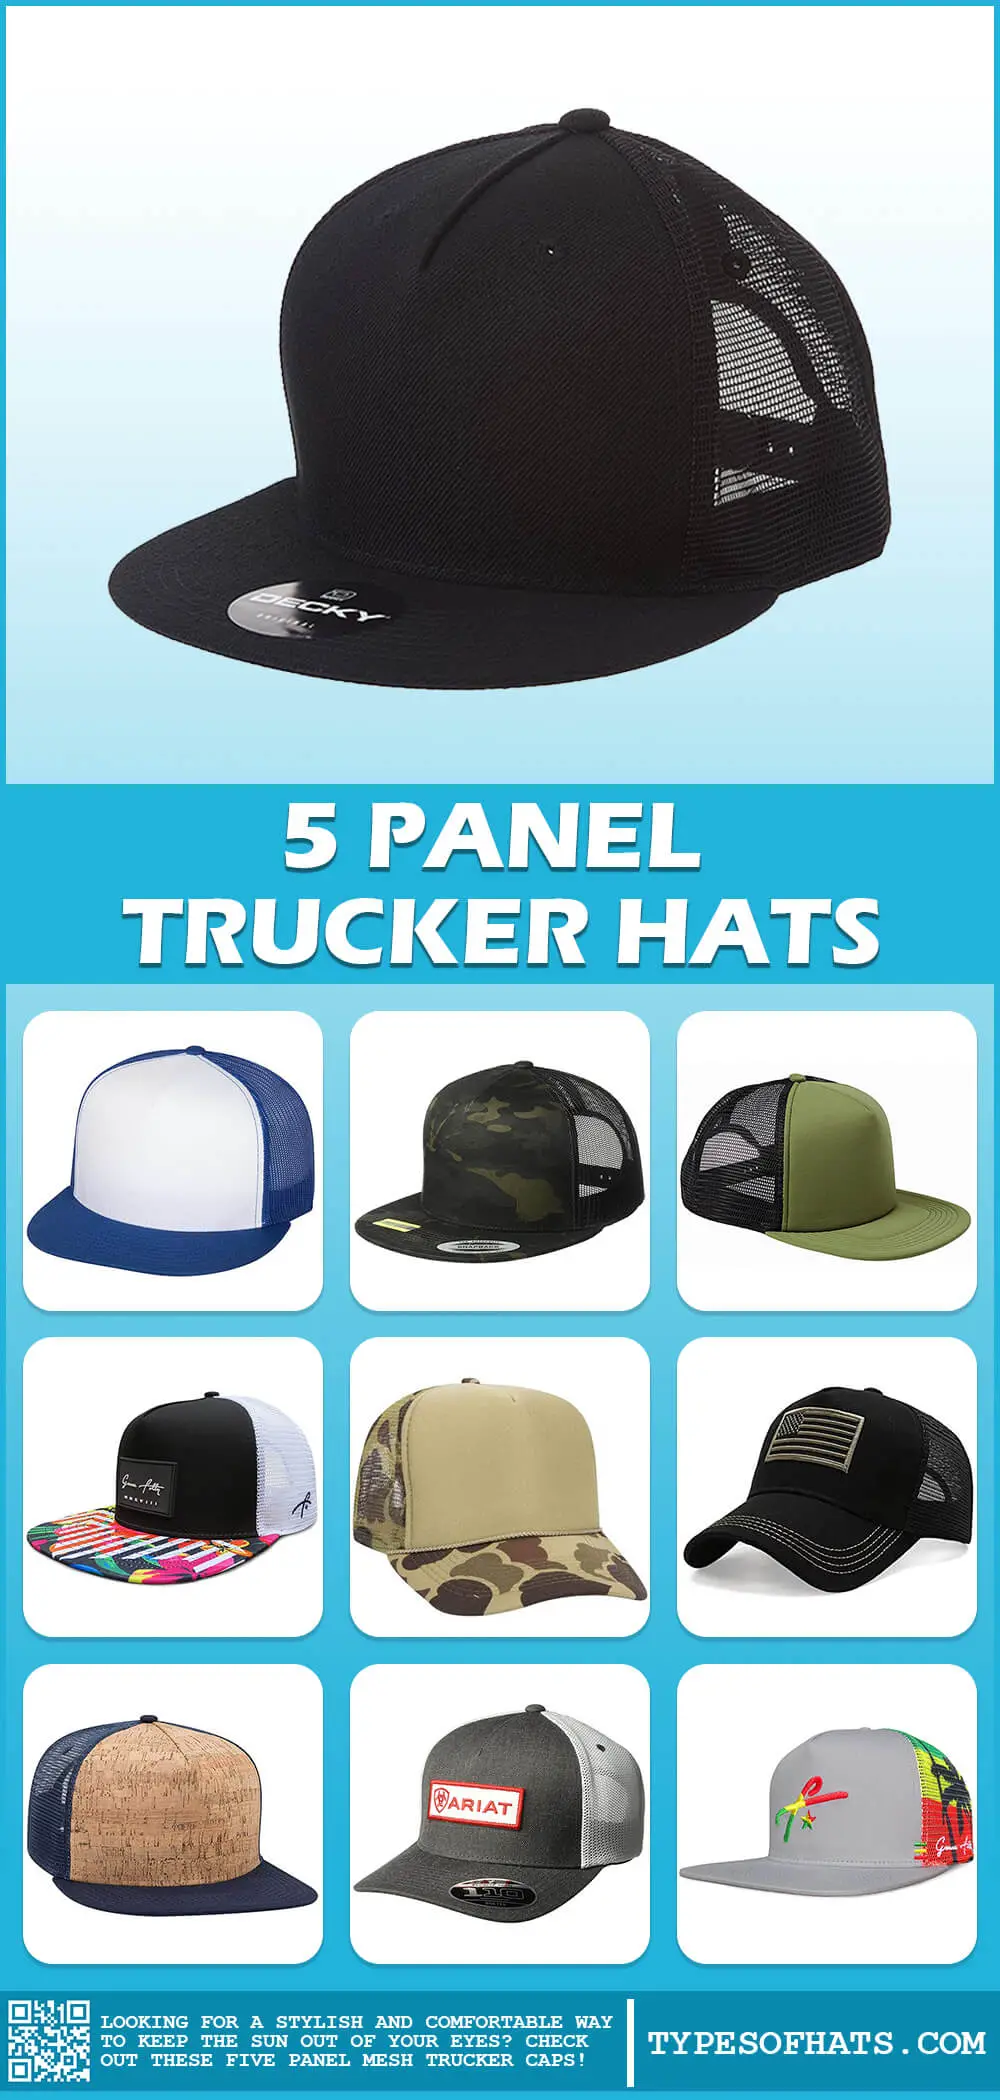 5 panel trucker hats